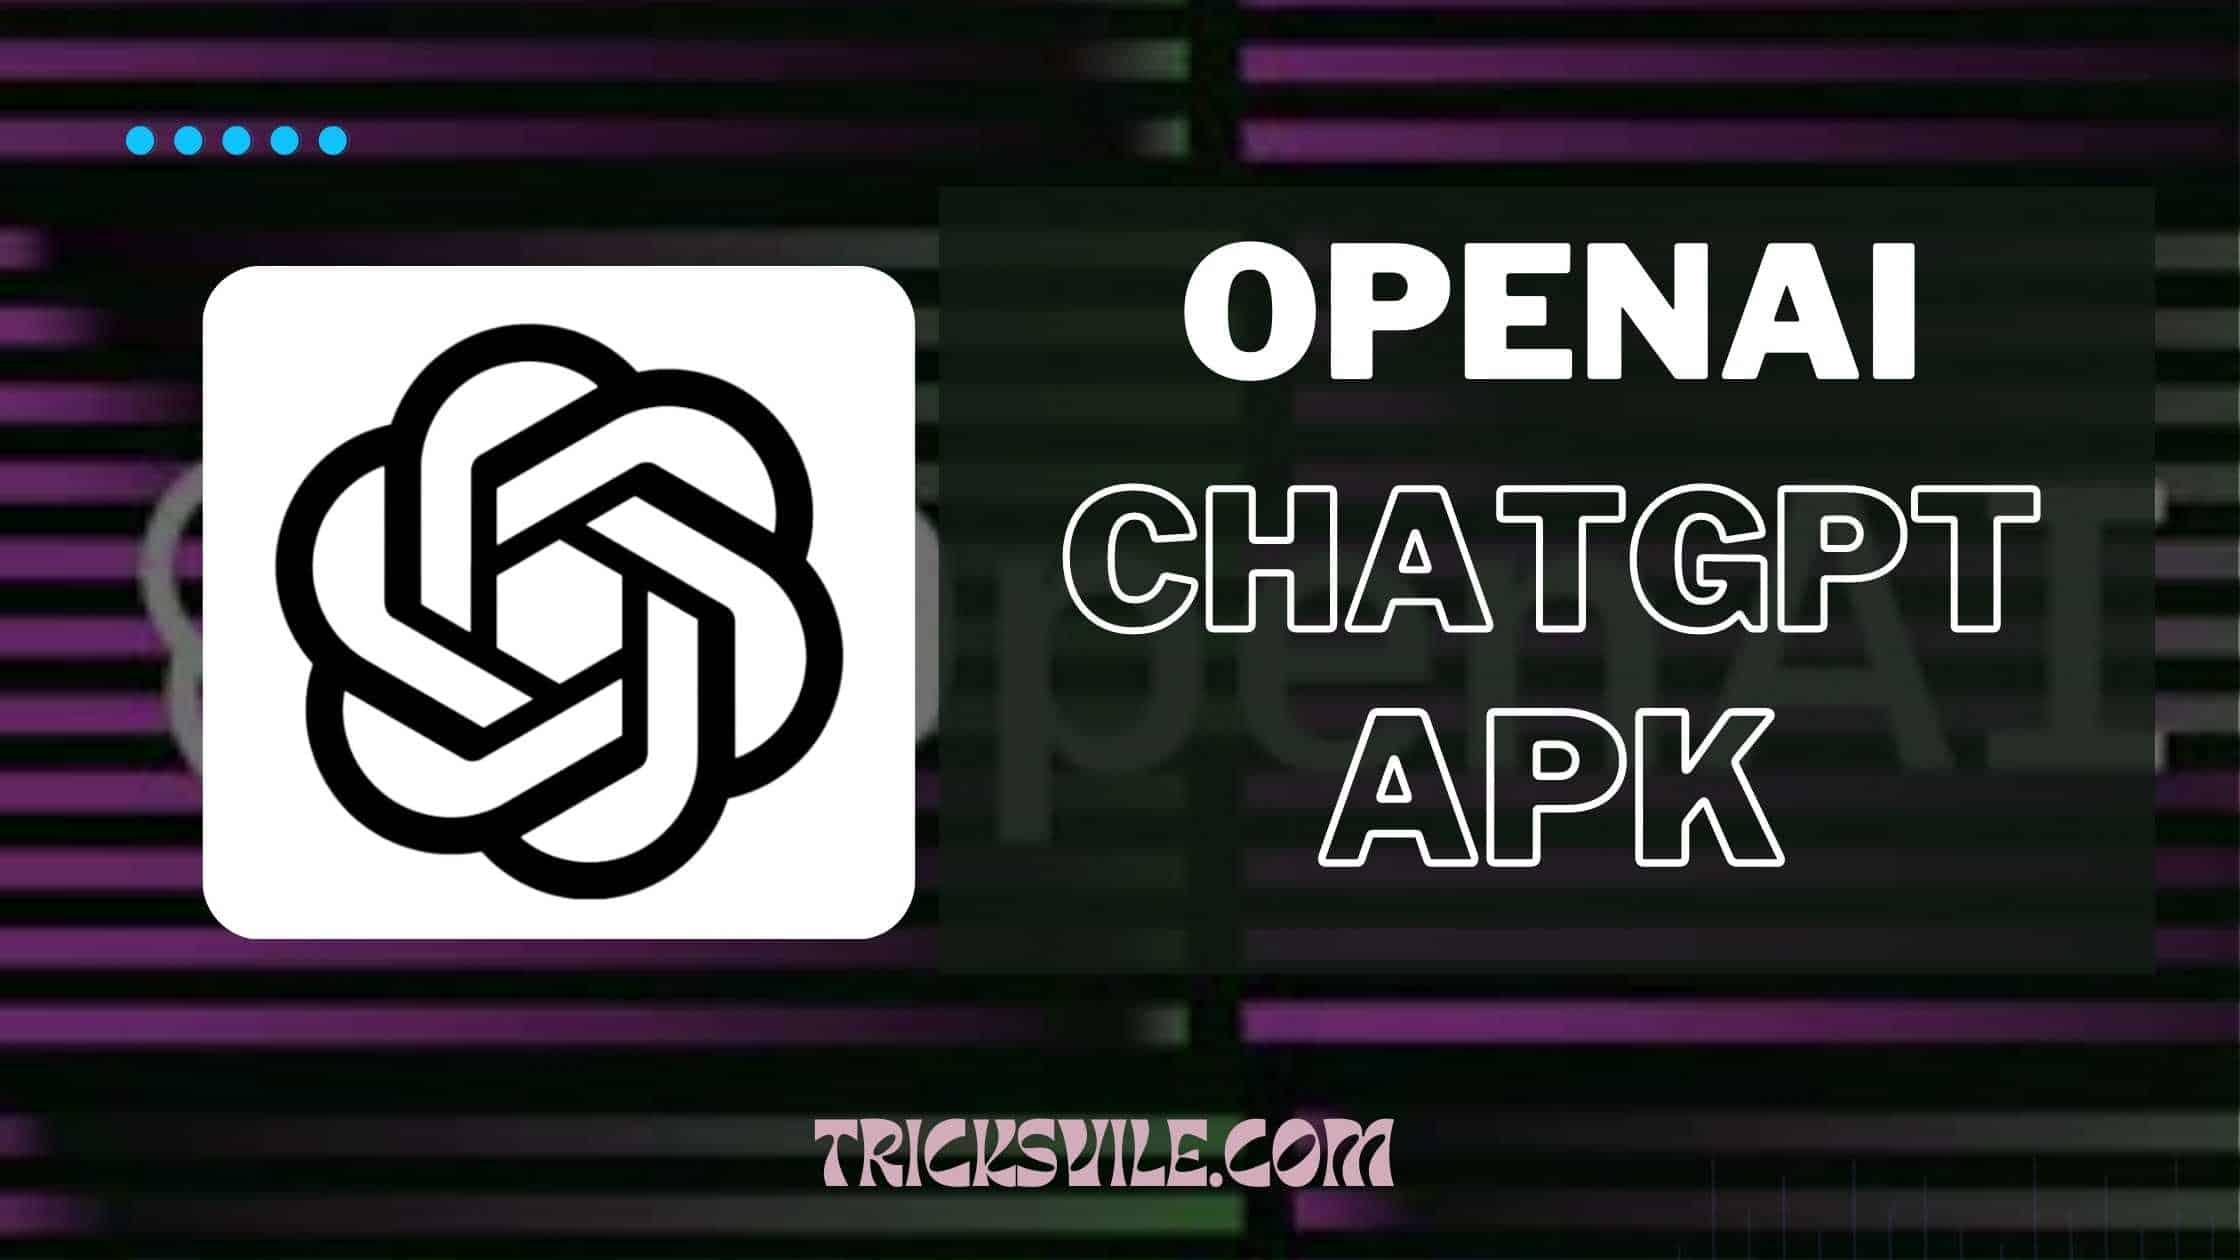 APK OpenAI Chatgpt